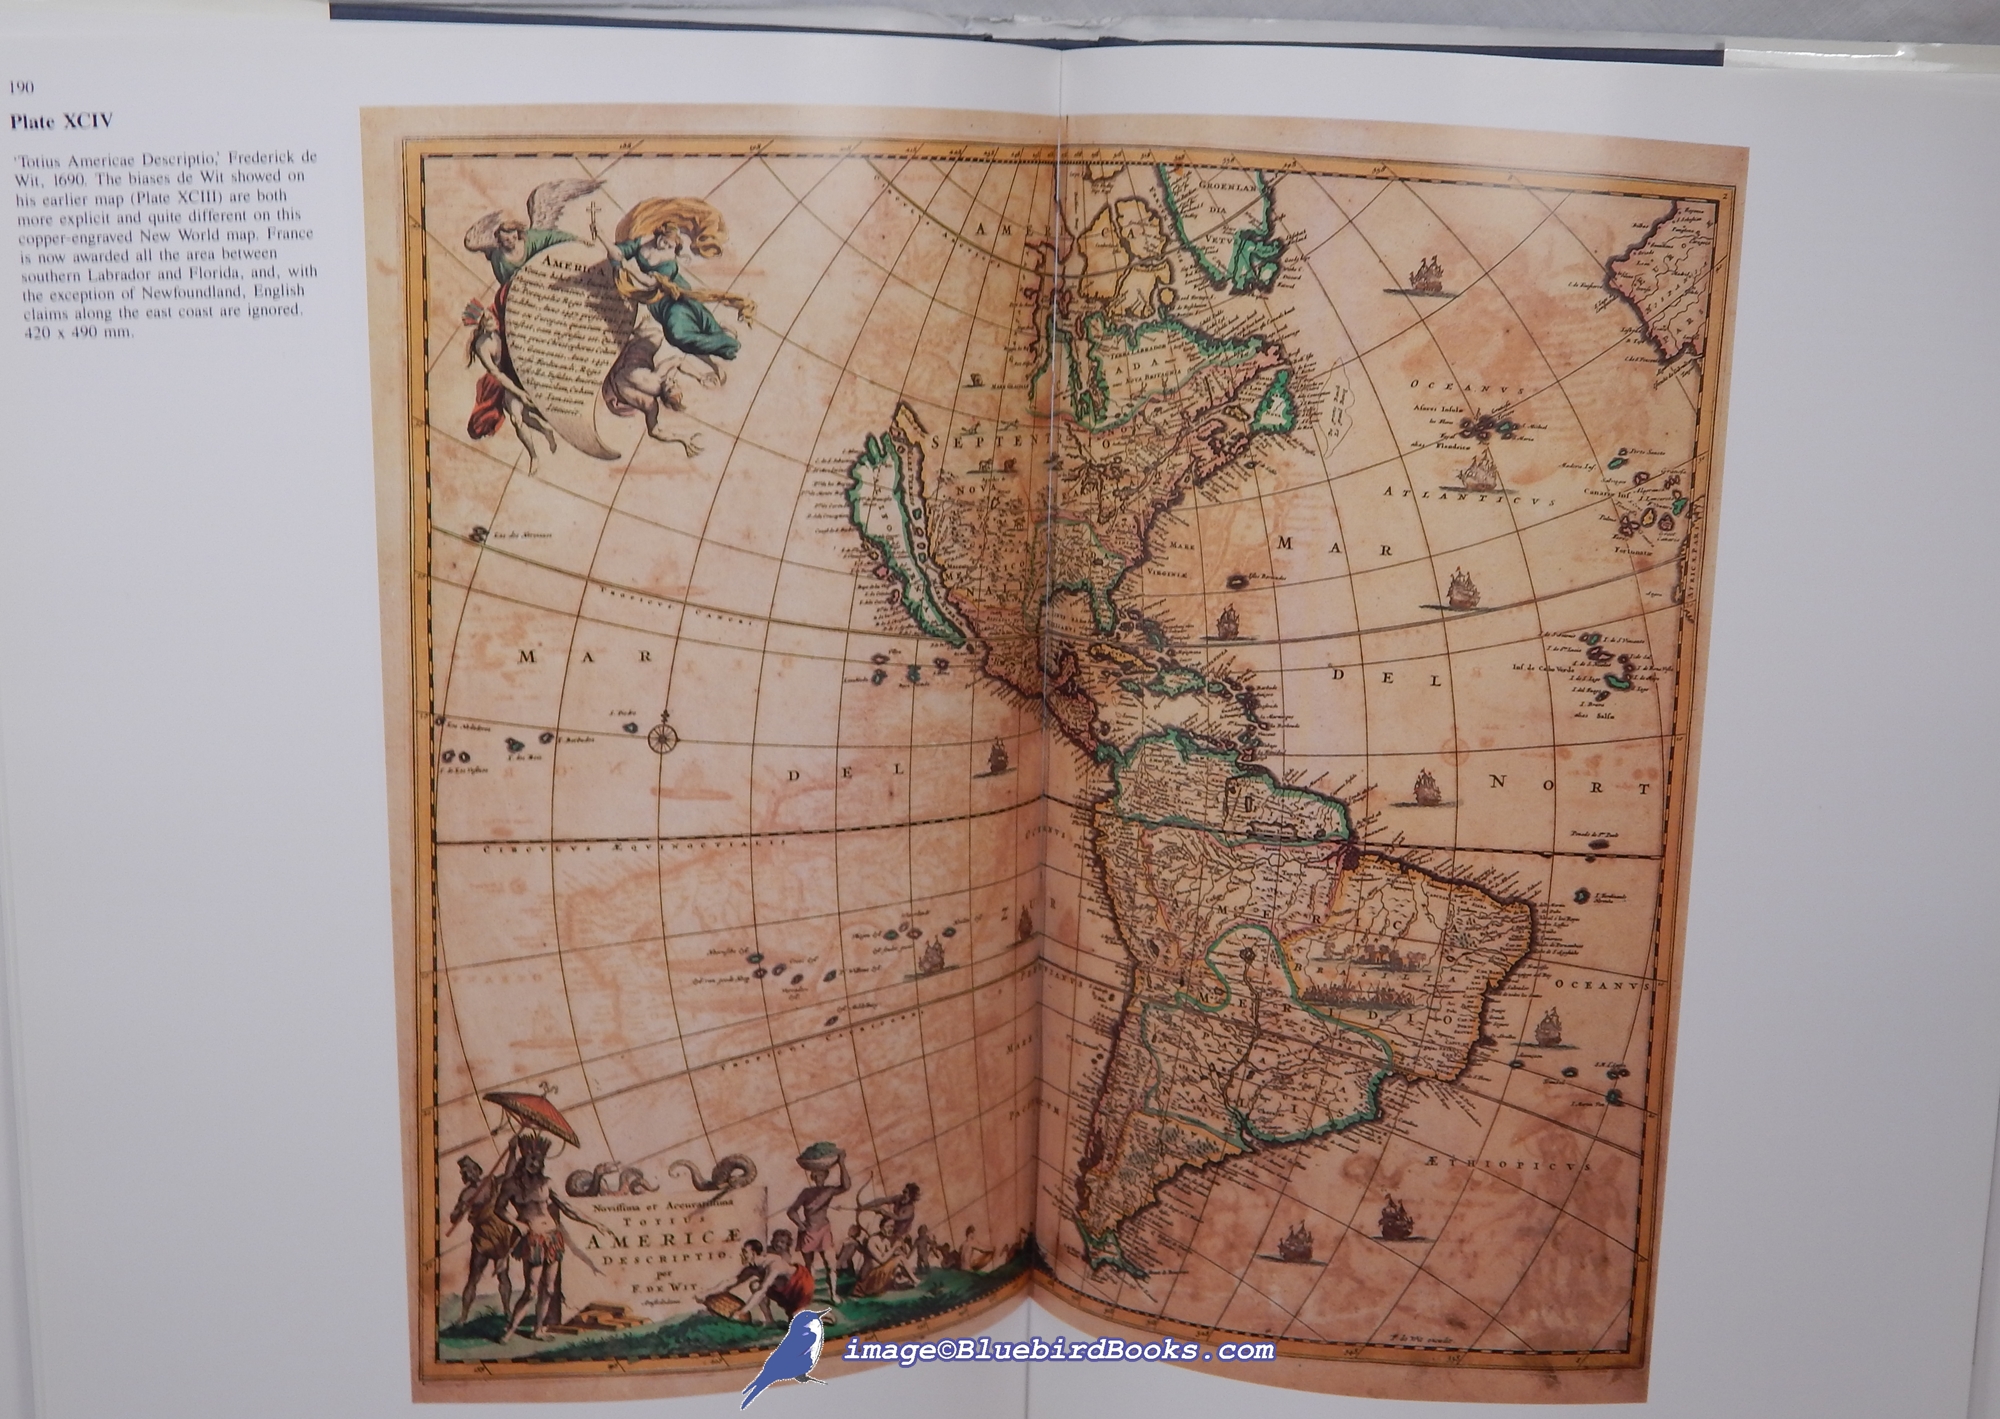 PORTINARO, PIERLUIGI; KNIRSCH, FRANCO - The Cartography of North America 1500-1800